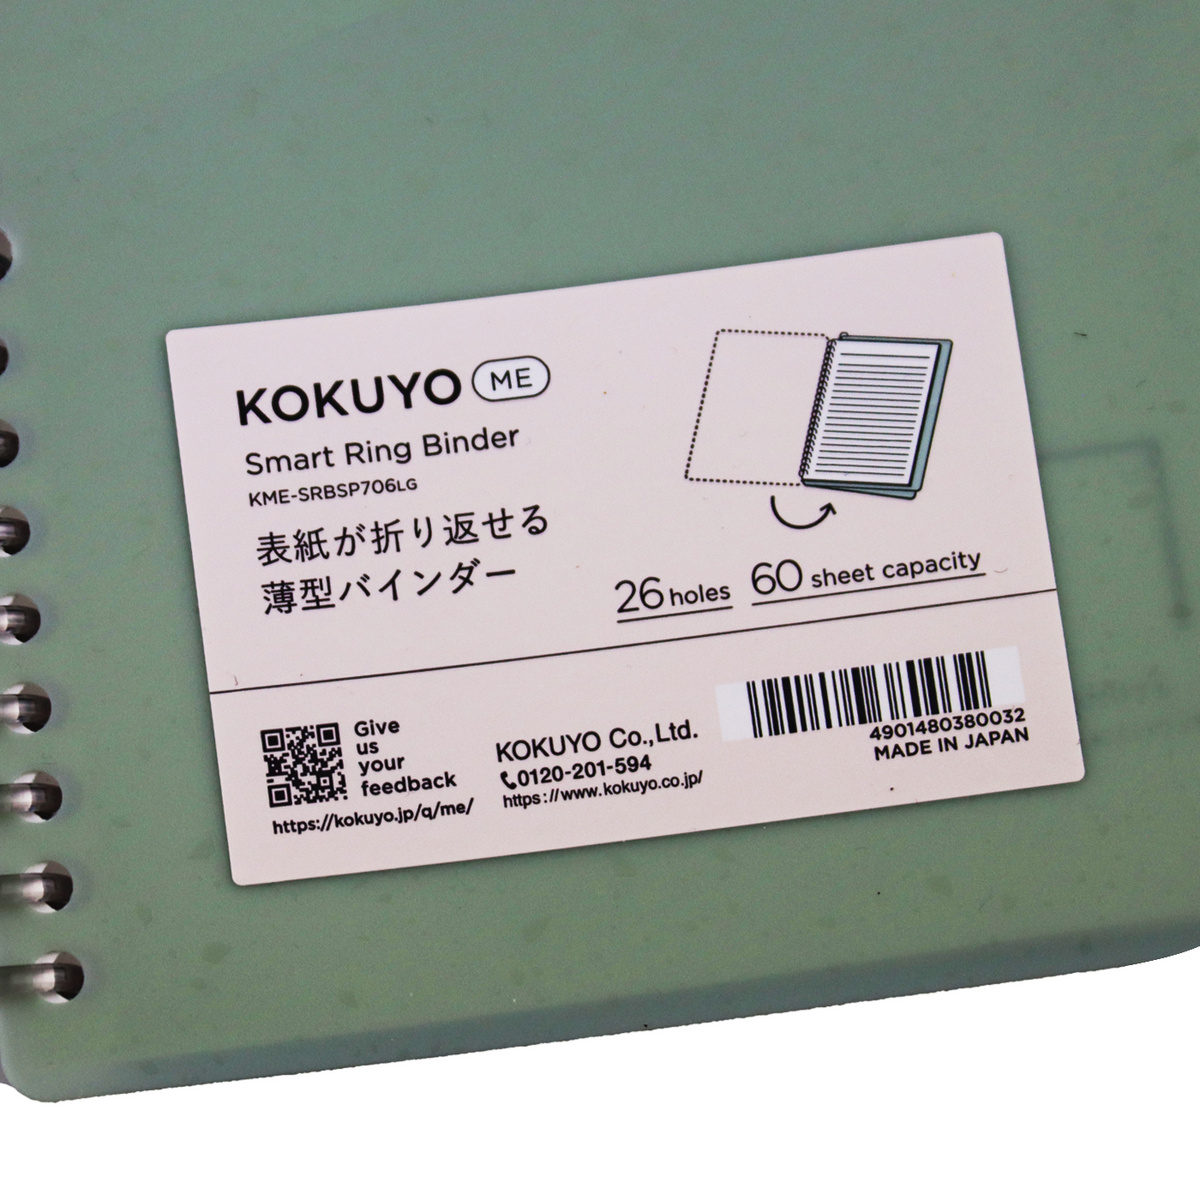 Kokuyo Campus Smart Ring 60 Limited Edition B5 Binder- Mint